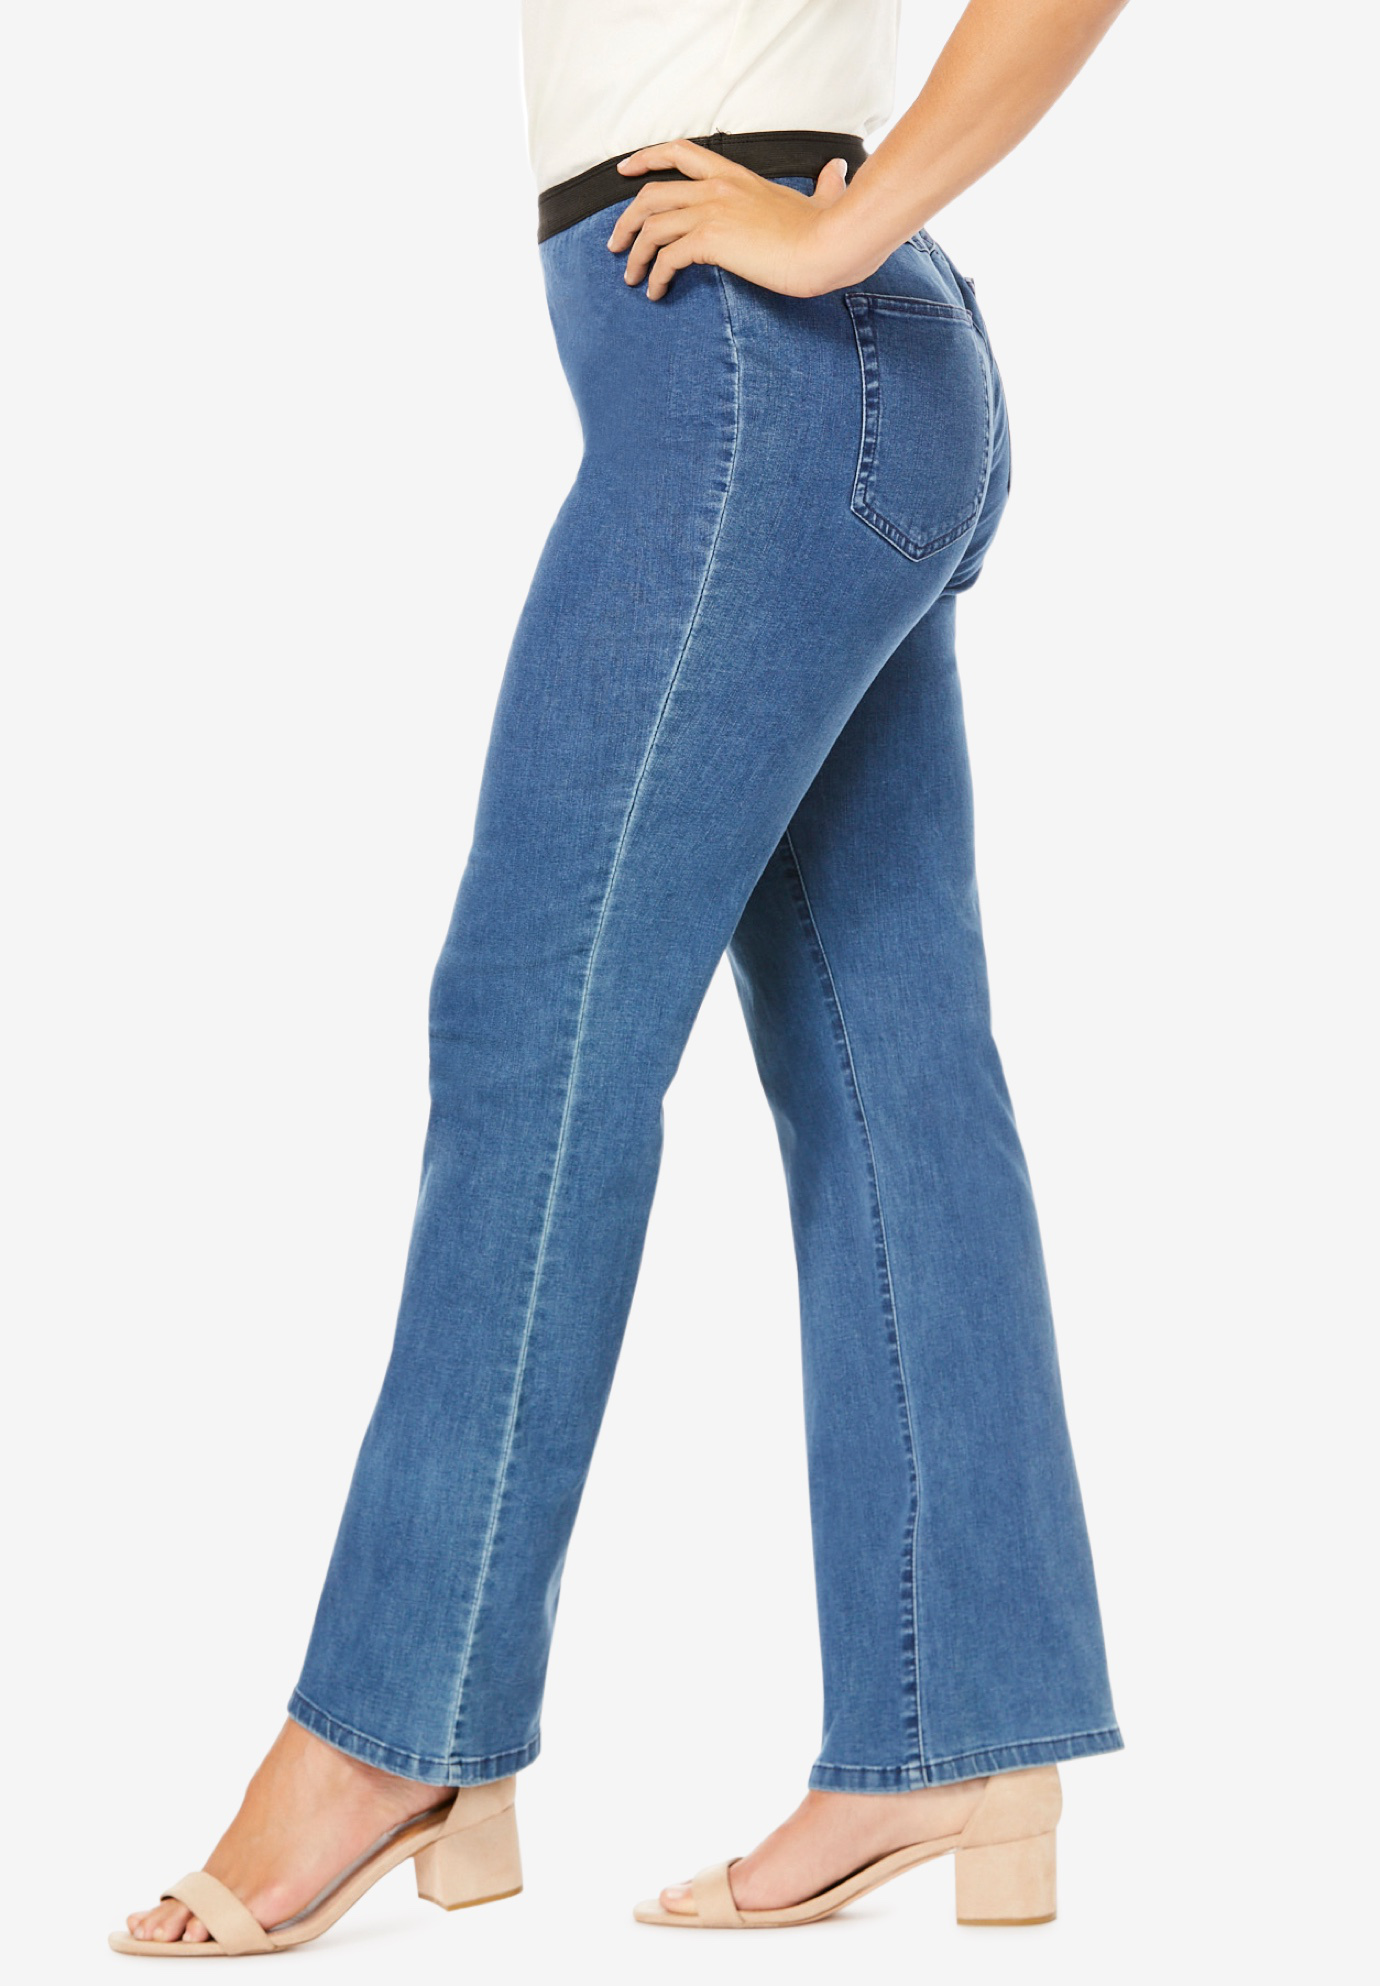 Jessica London Women's Plus Size Bootcut Stretch Jeans Elastic Waist - 16, Indigo Blue - image 4 of 6